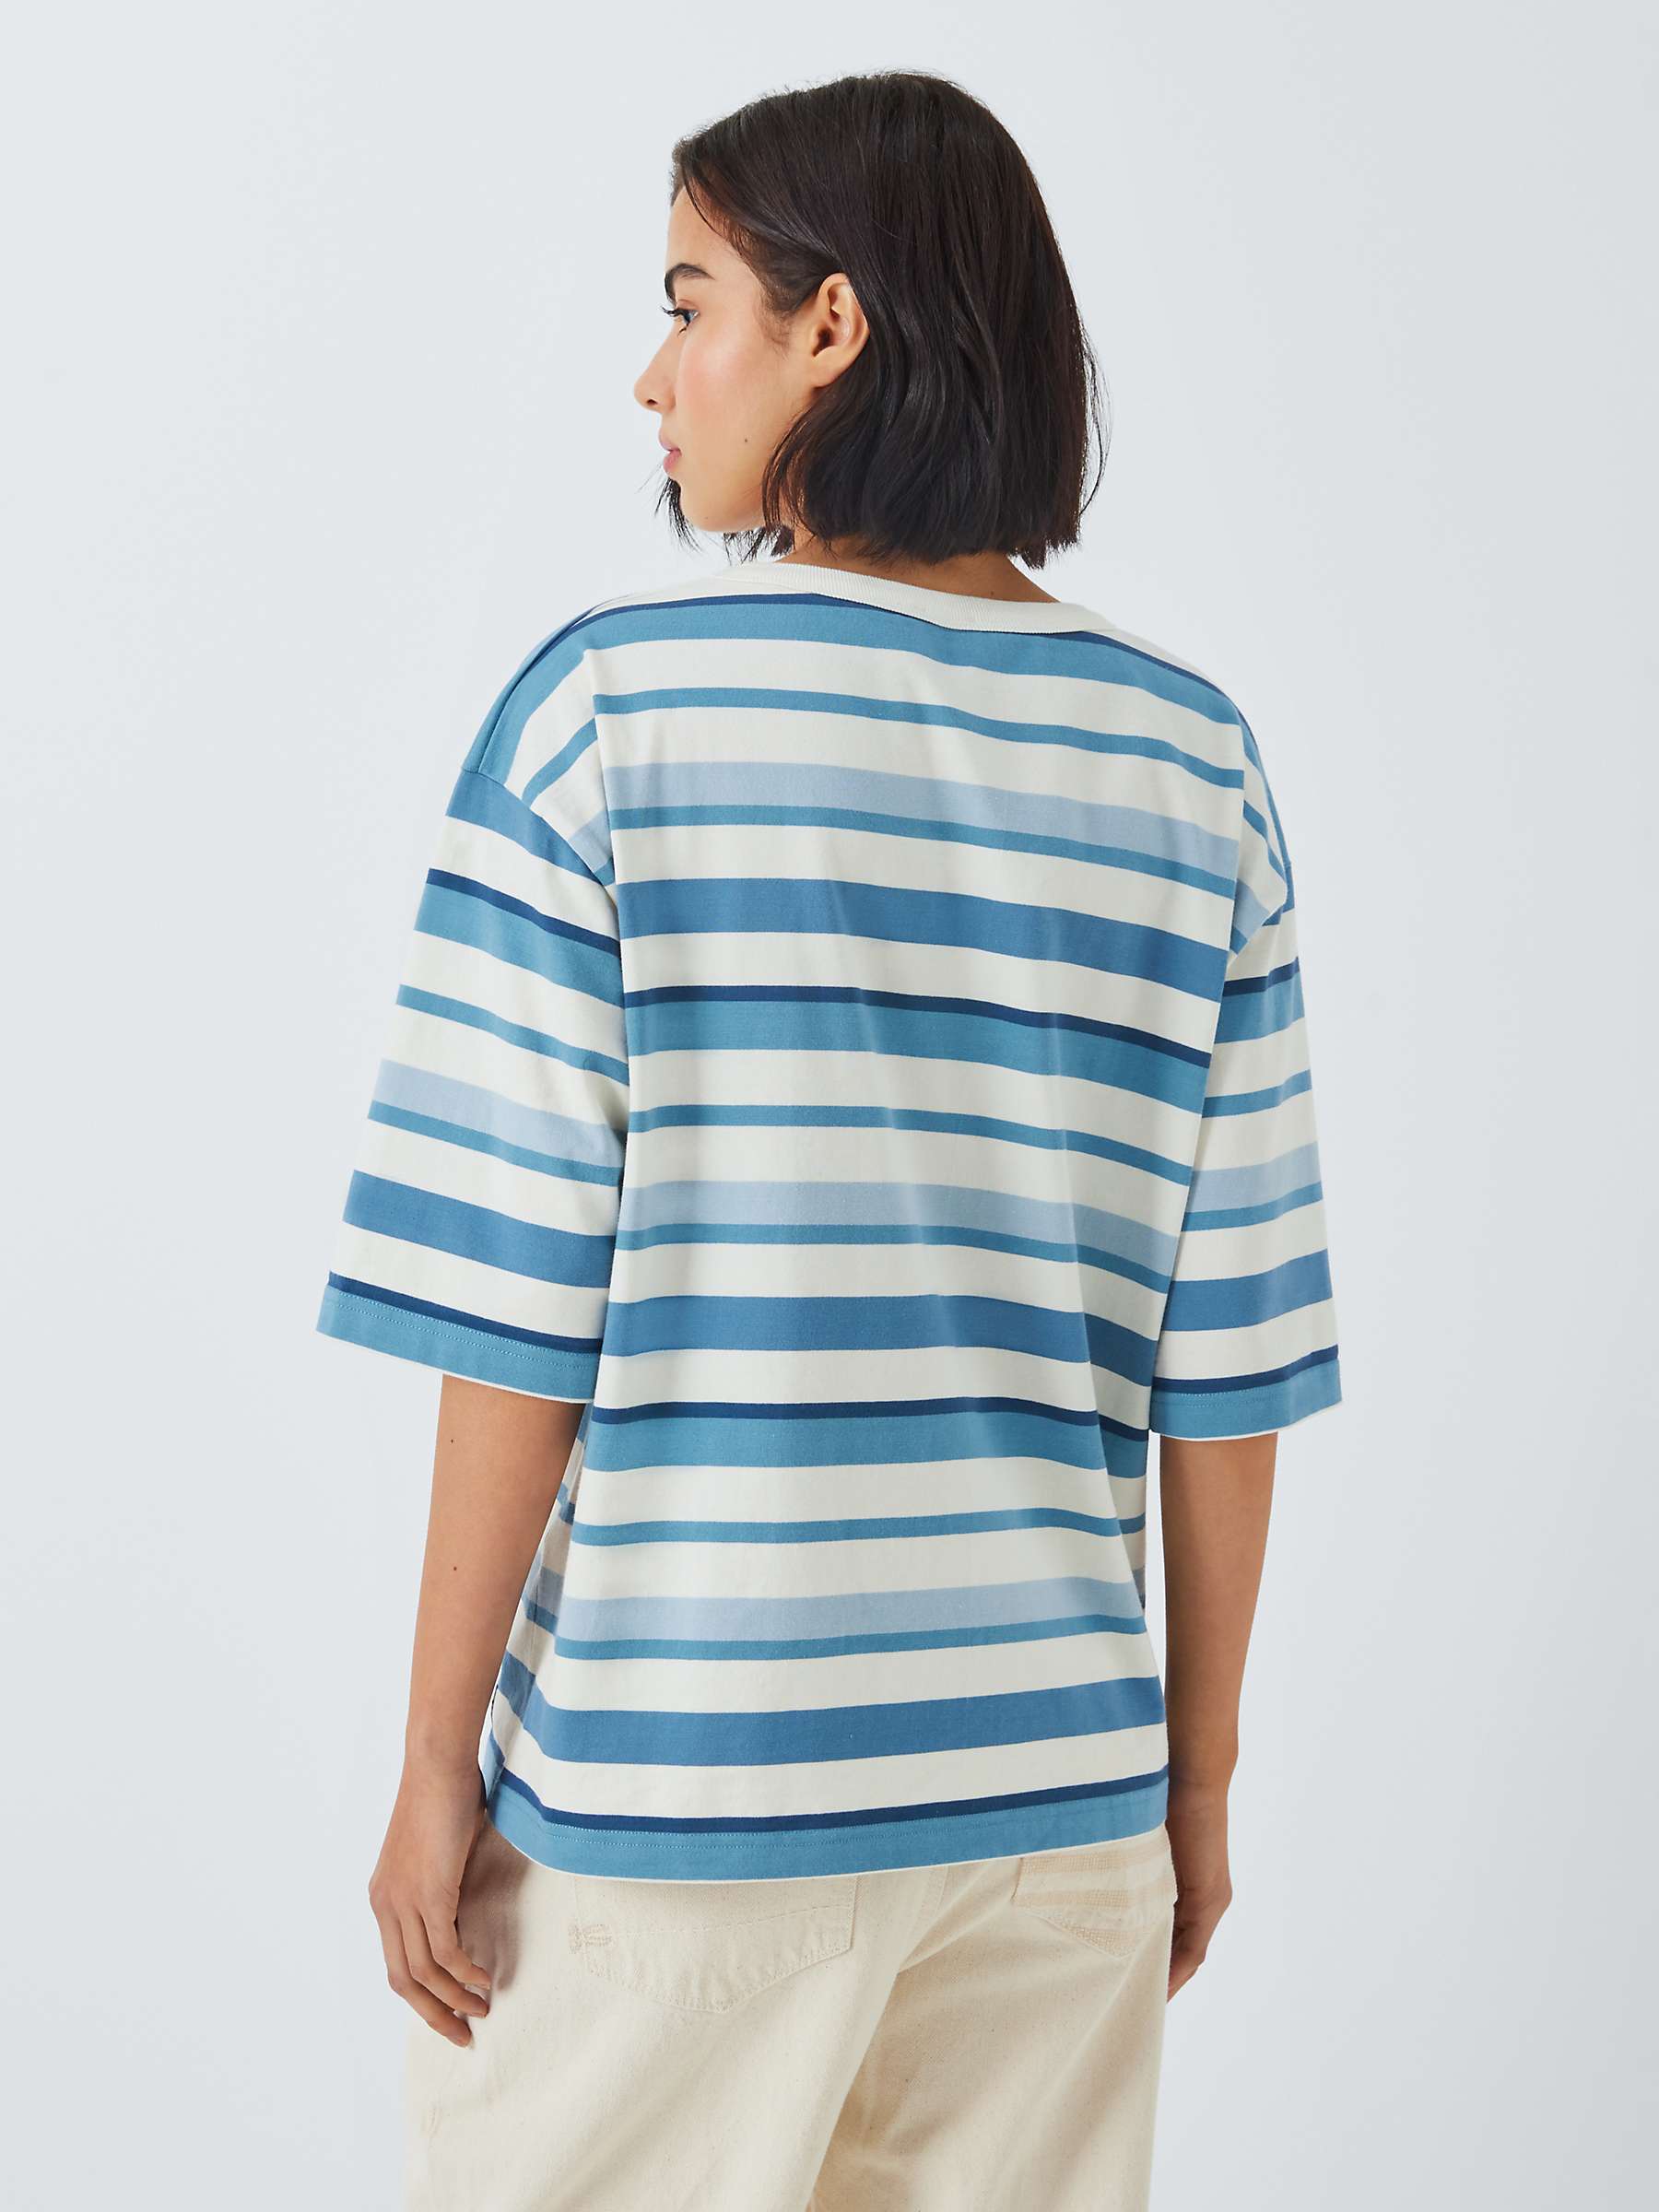 Buy Armor Lux x Denham Comfort Stripe Shirt, White/Blue Online at johnlewis.com